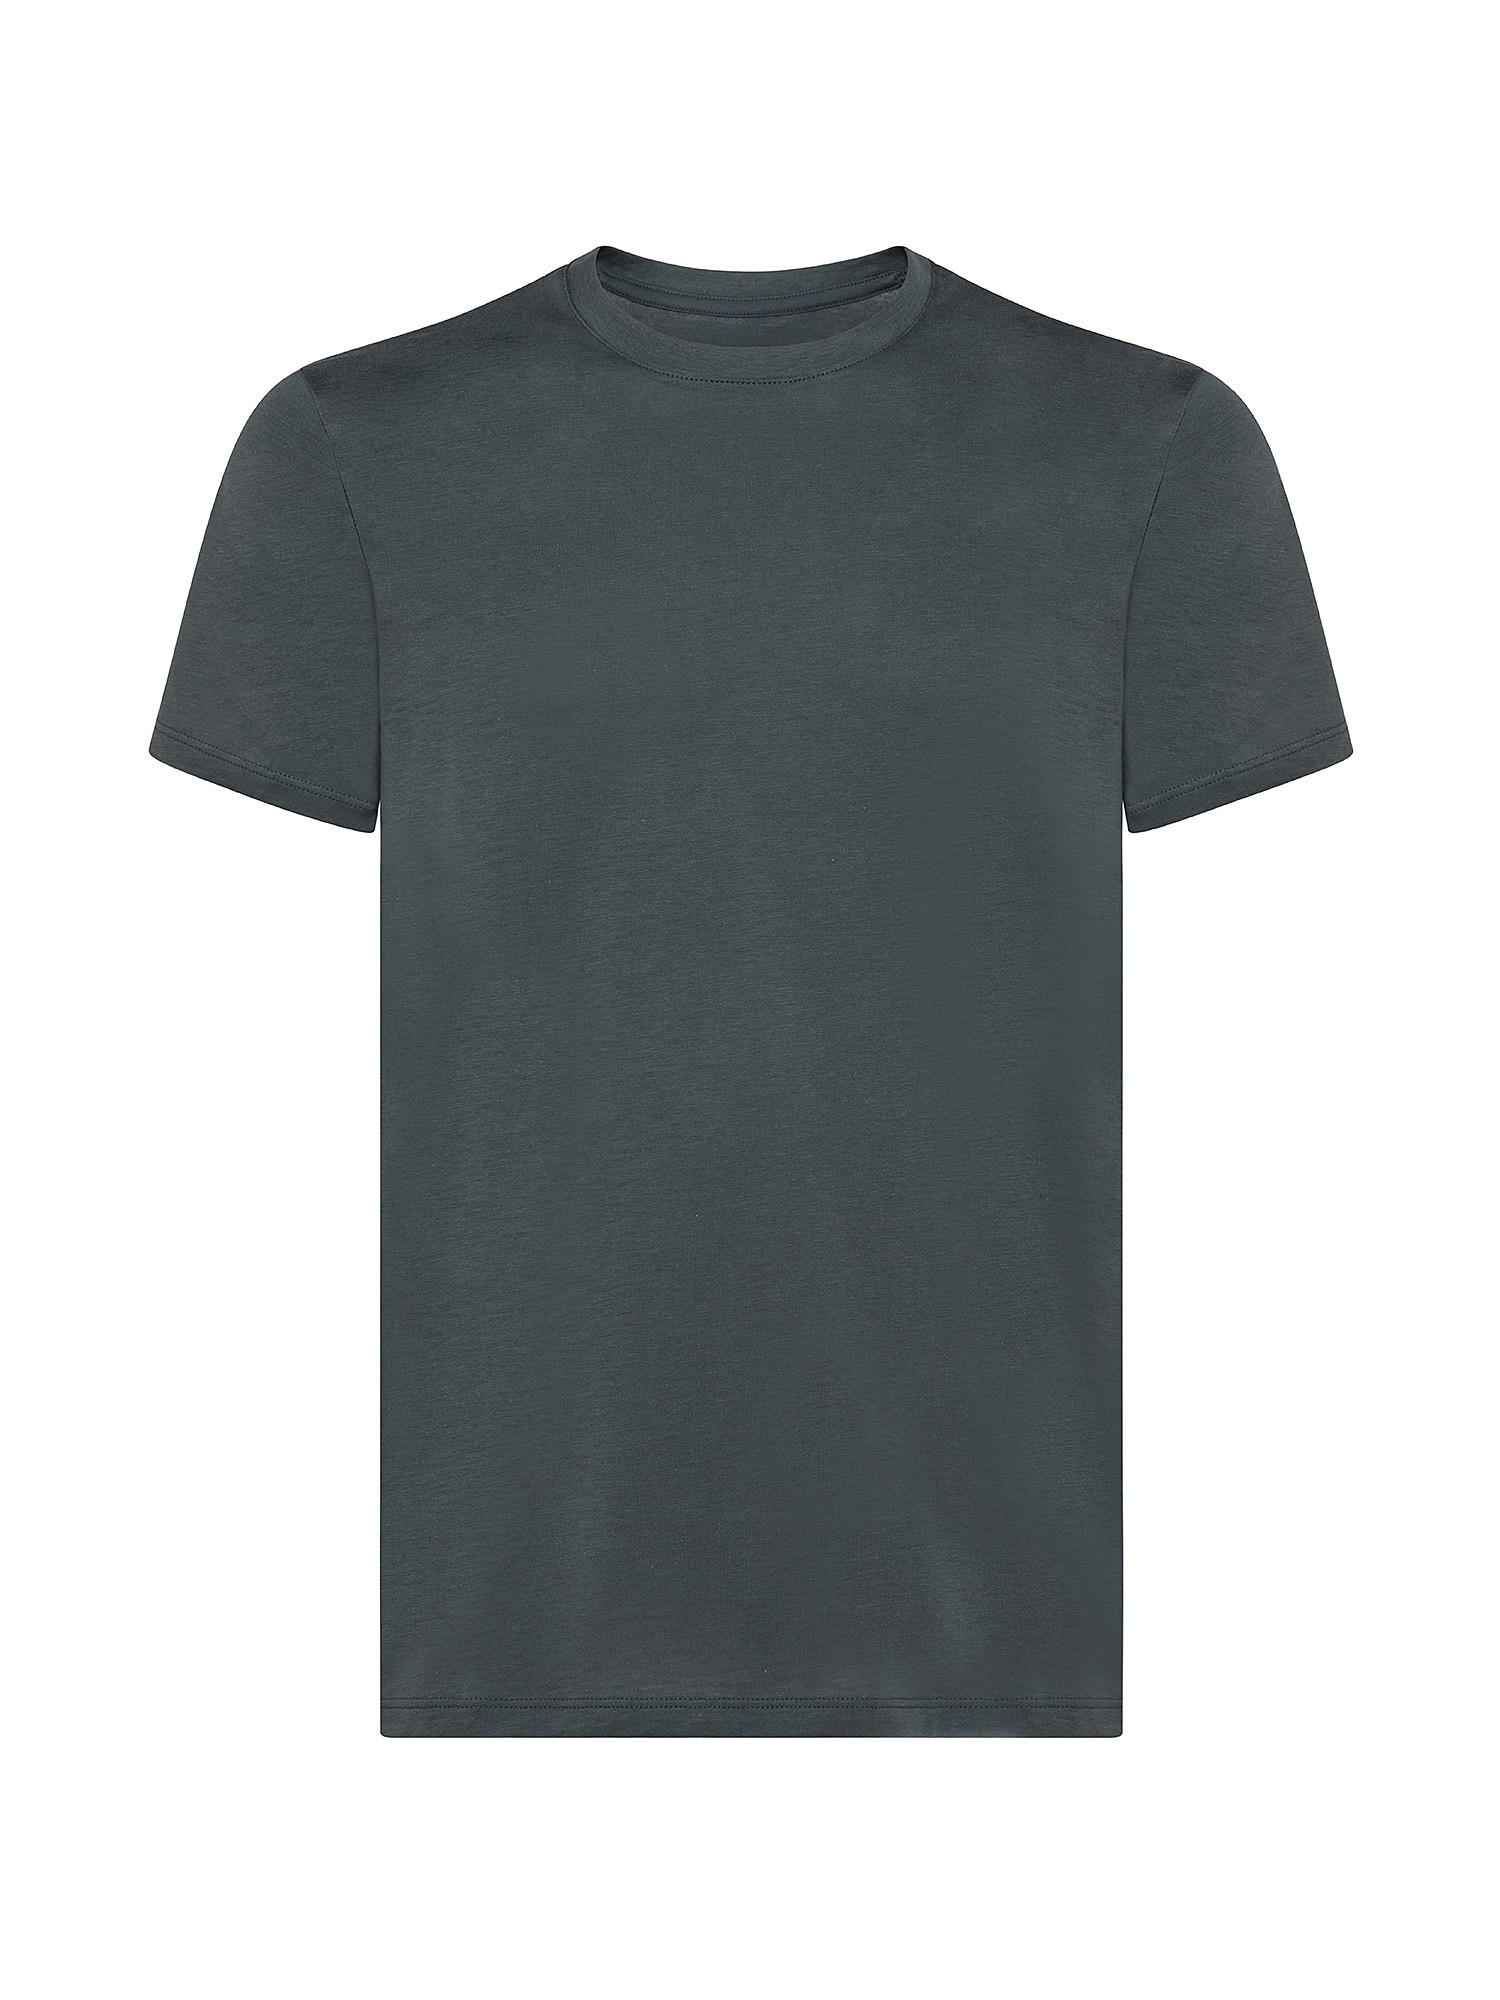 T-shirt, Dark Grey, large image number 0